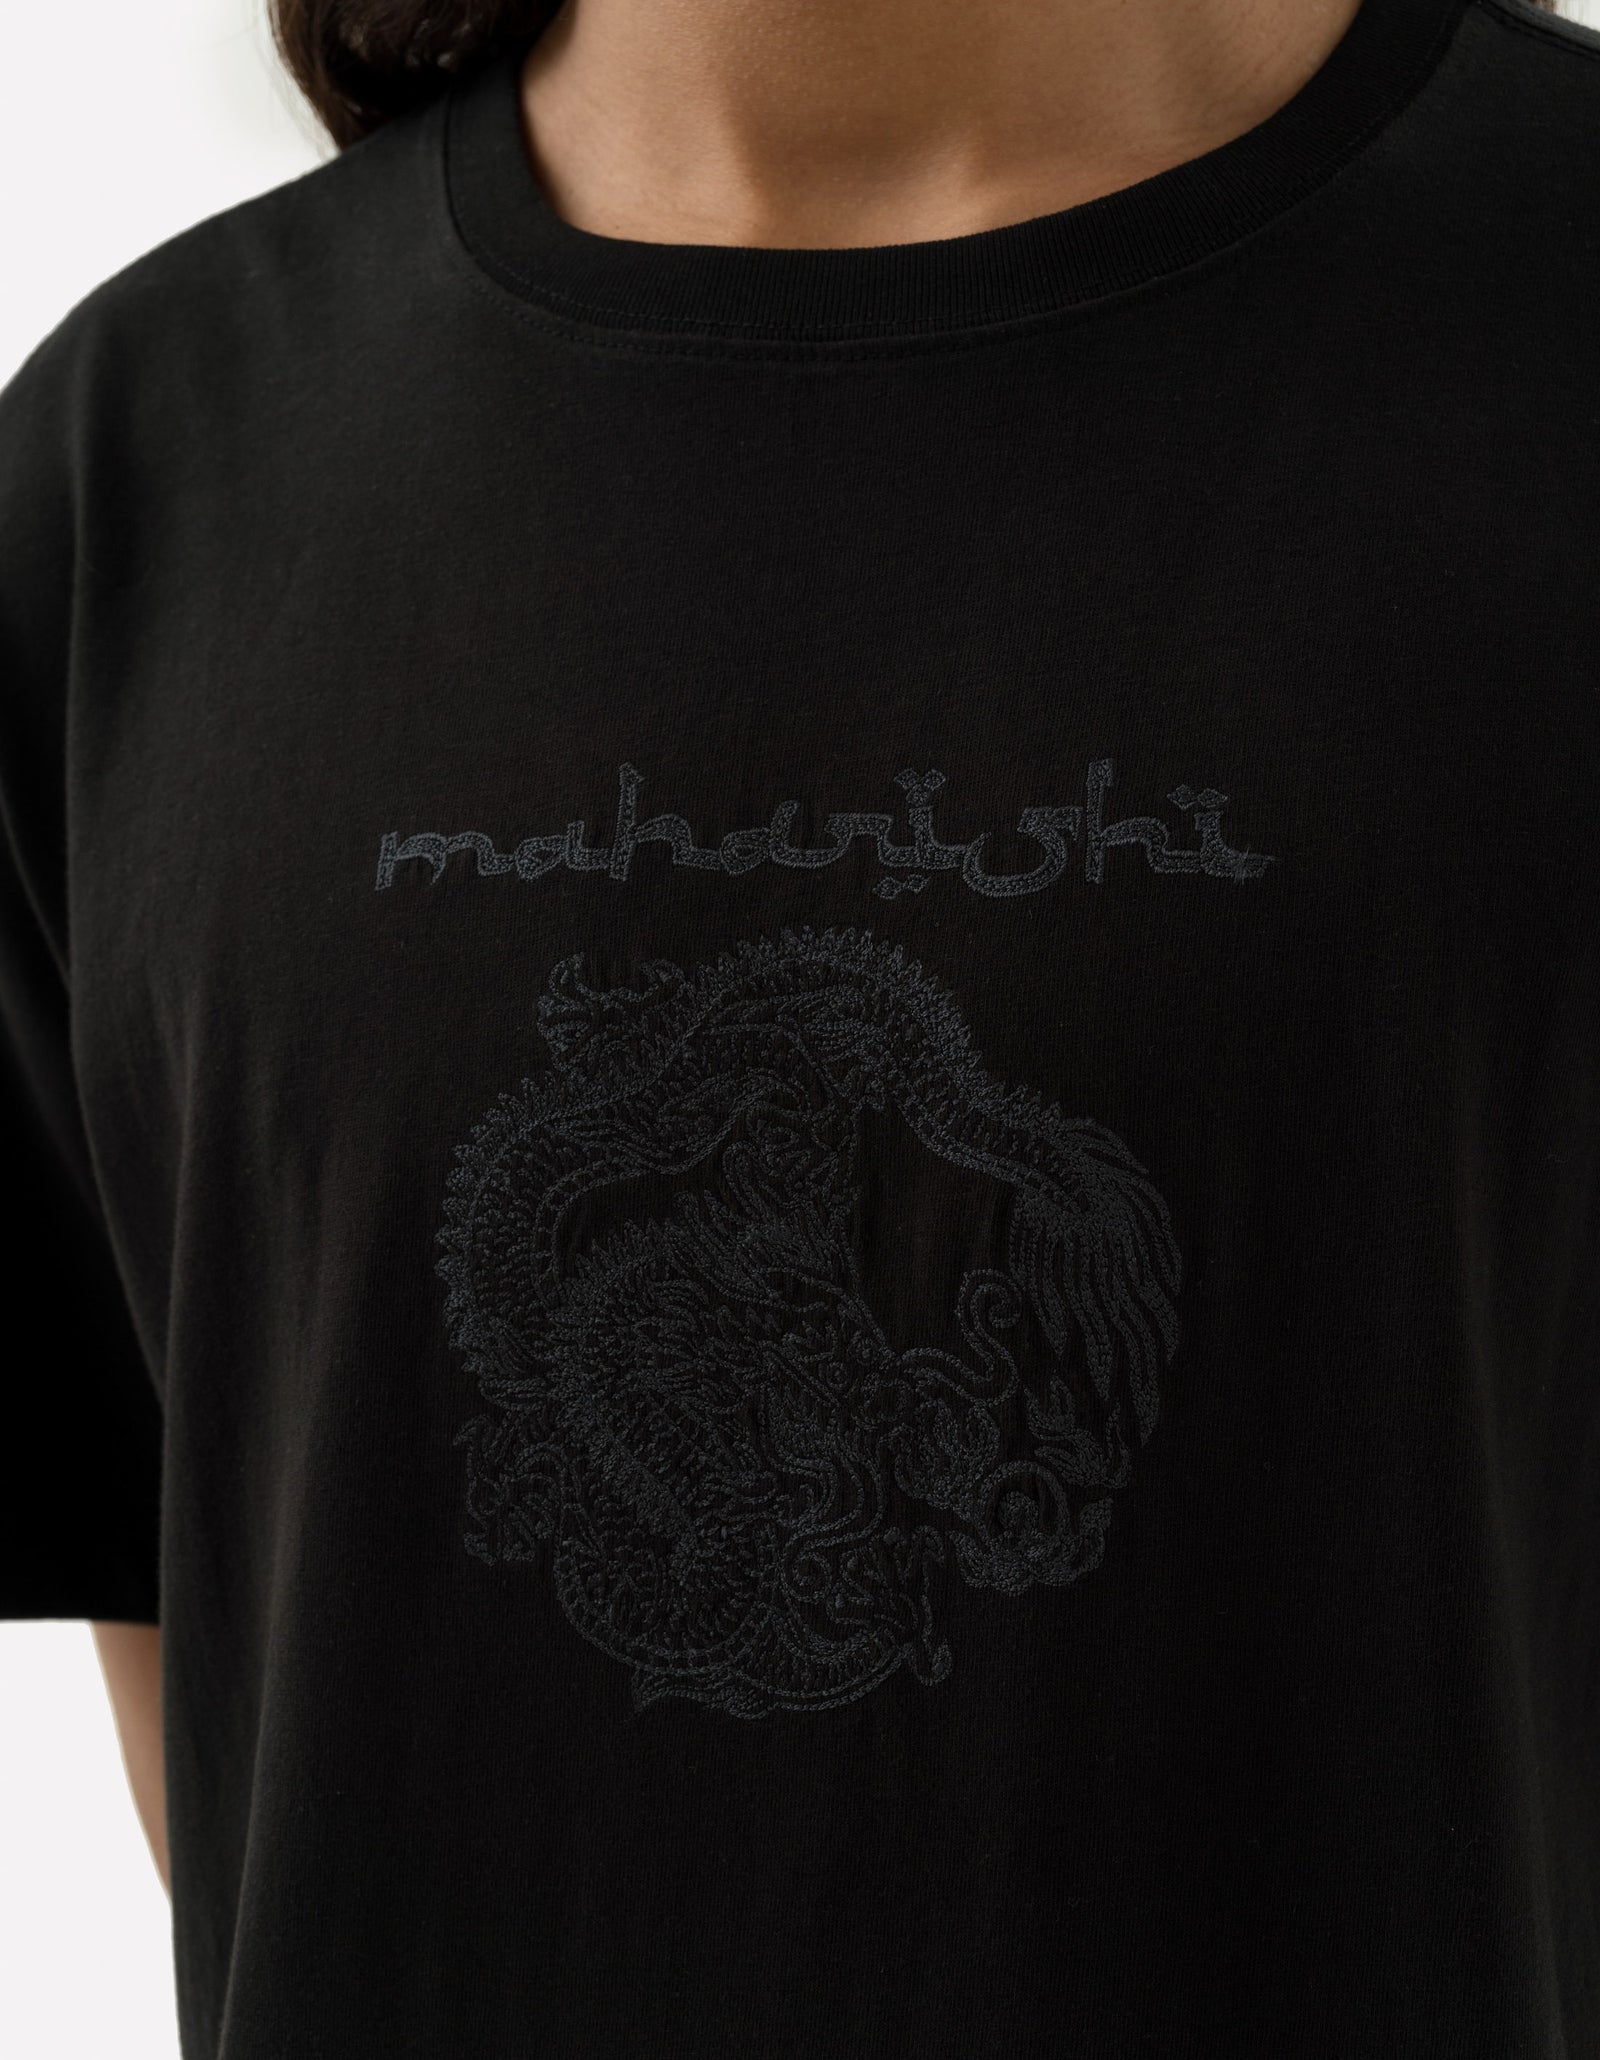 5242 Thar Dragon Embroidered T-Shirt Black